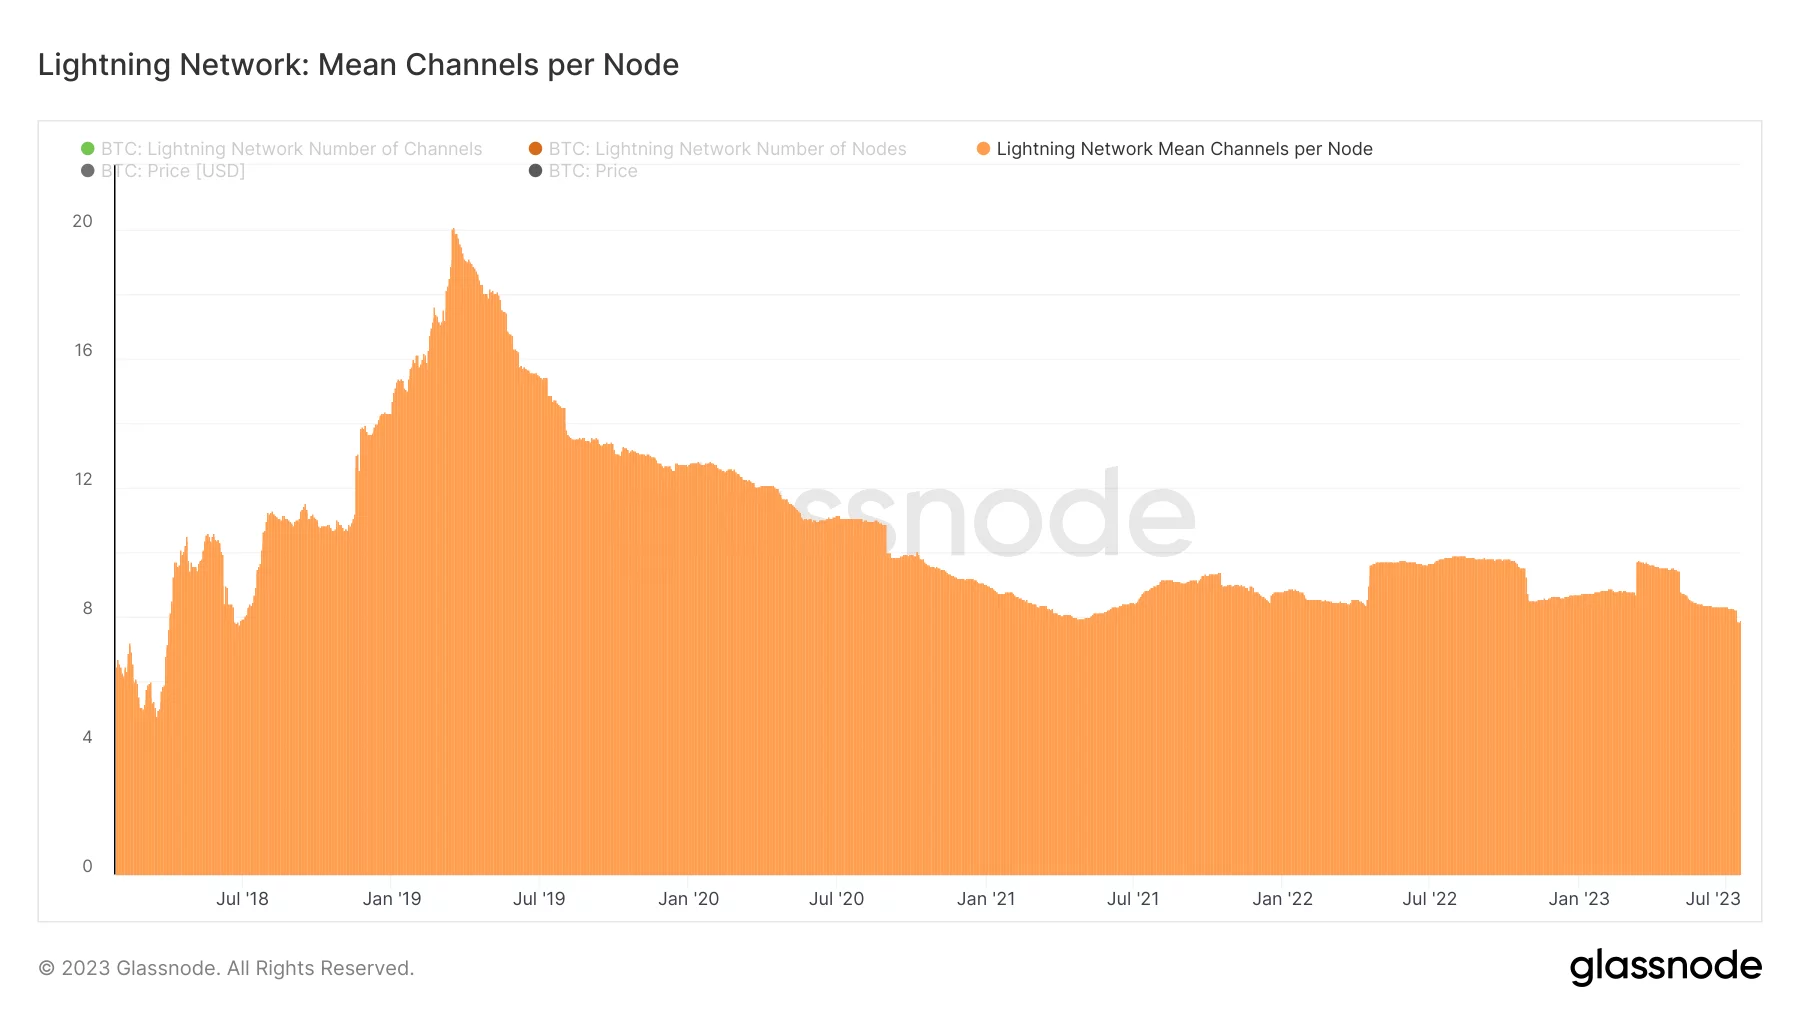 Рисунок 4 - Среднее количество каналов на узел в сети Lightning Network